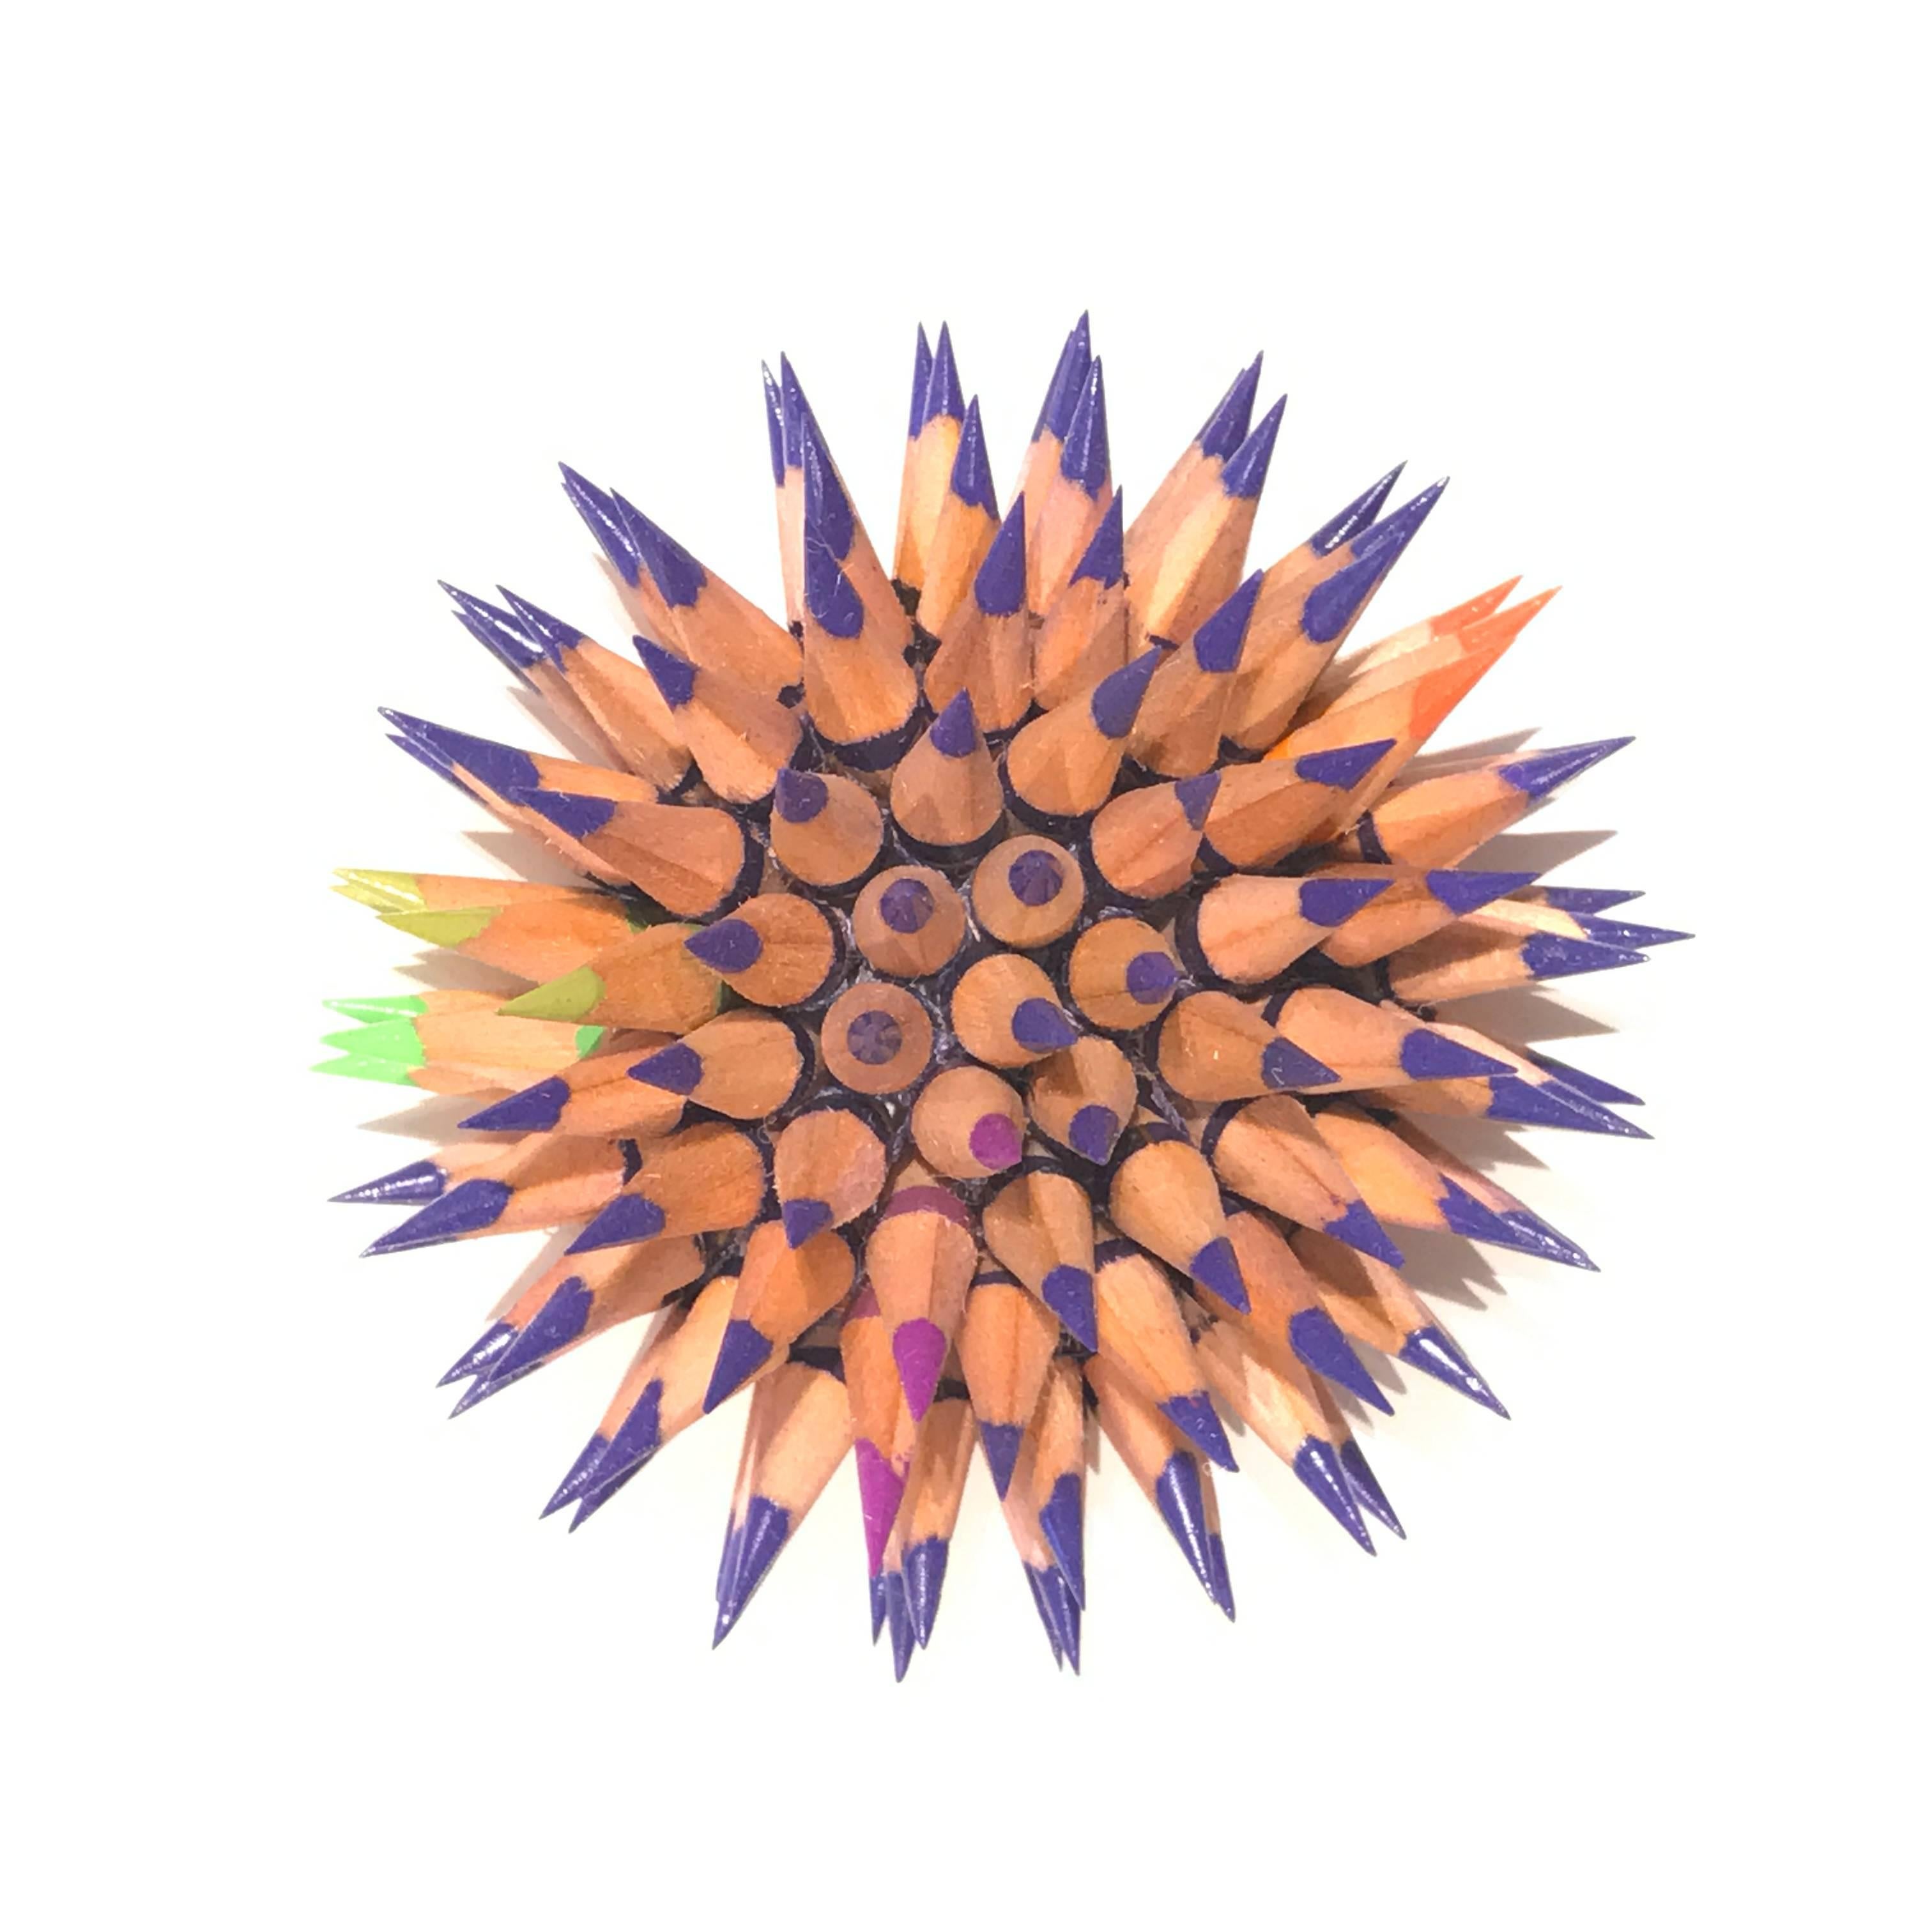 Indigo and Fuschia Sea Urchin - Mixed Media Art by Jennifer Maestre